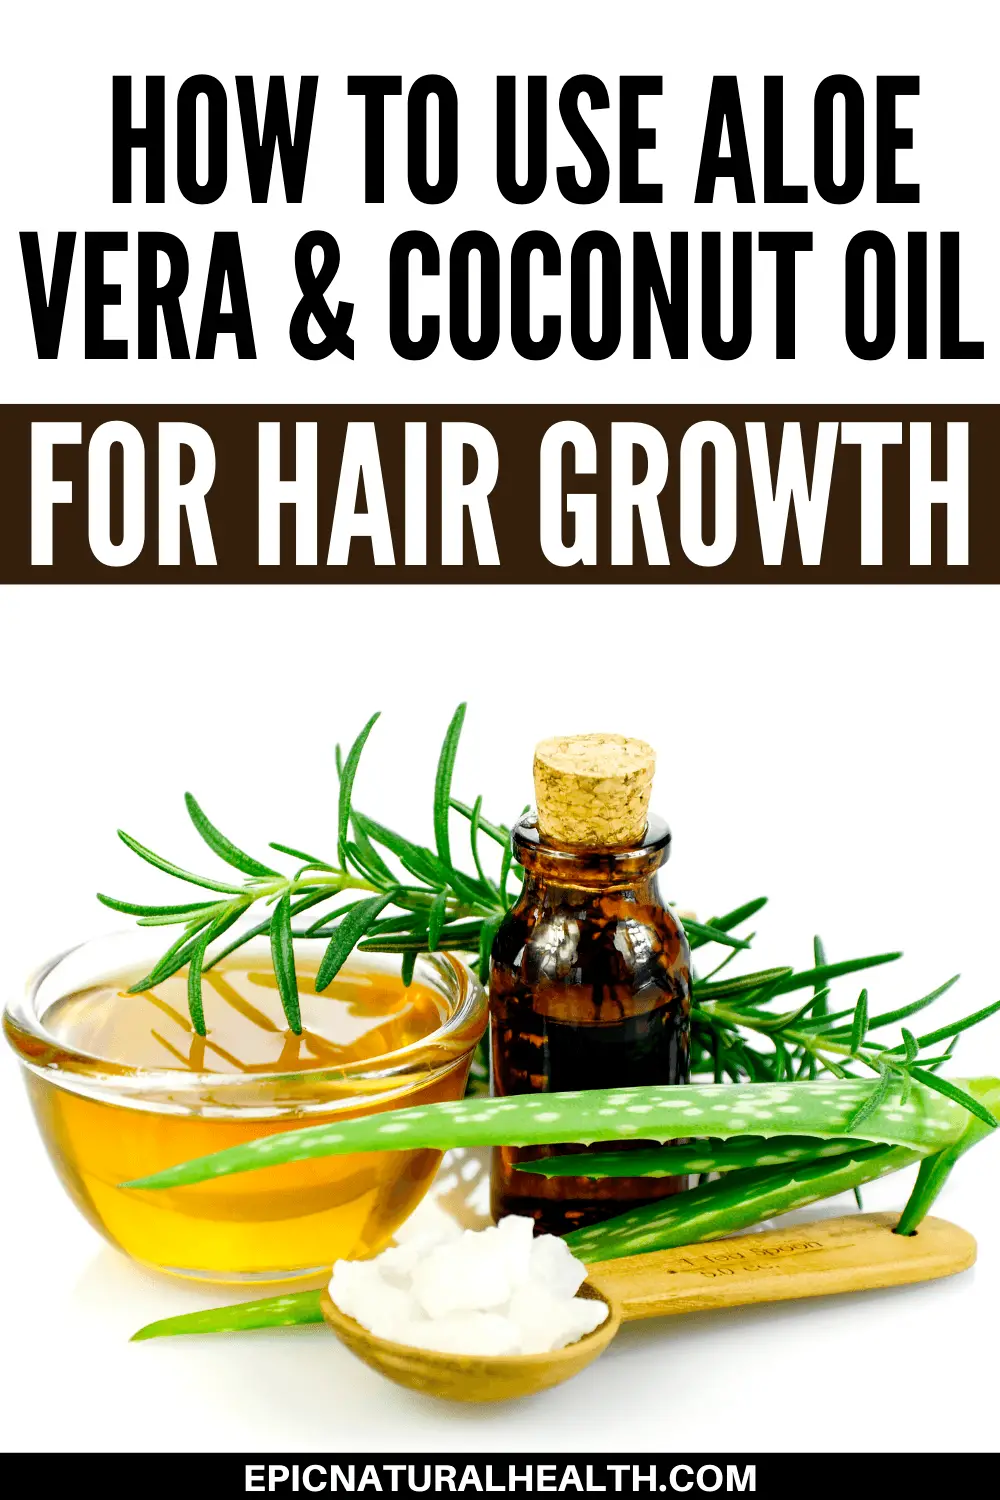 How To Use Aloe Vera & Coconut Oil For Hair Growth